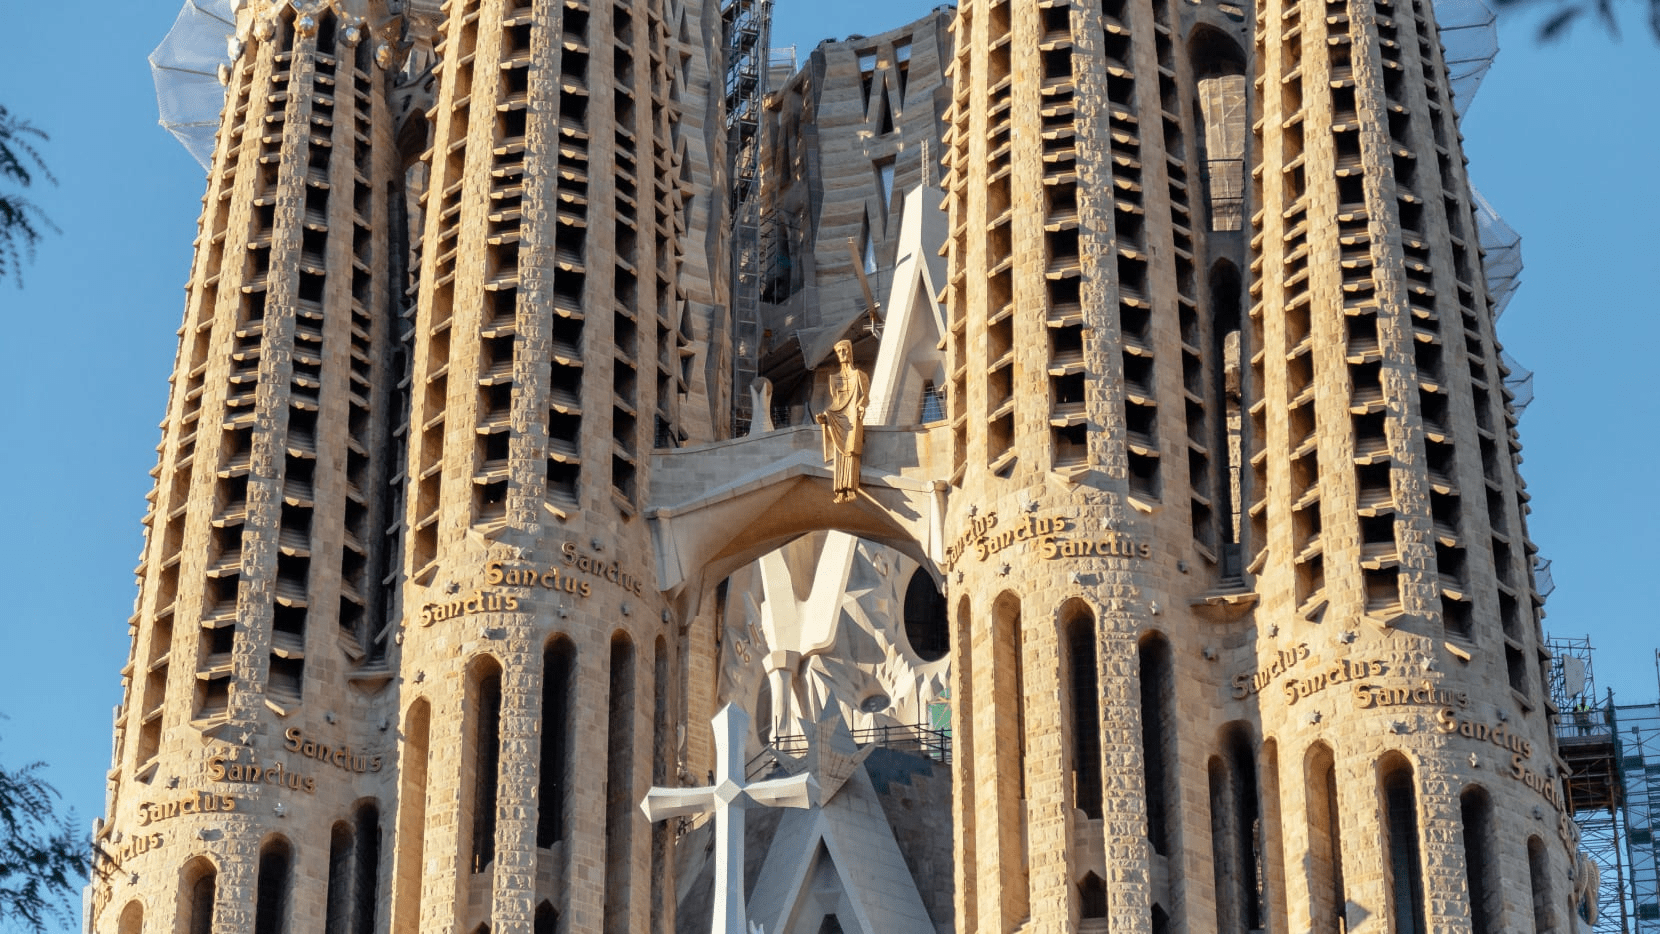 Sagrada Familia by Gaudi - Basilica in Barcelona, Spain - 137 Year Project 62